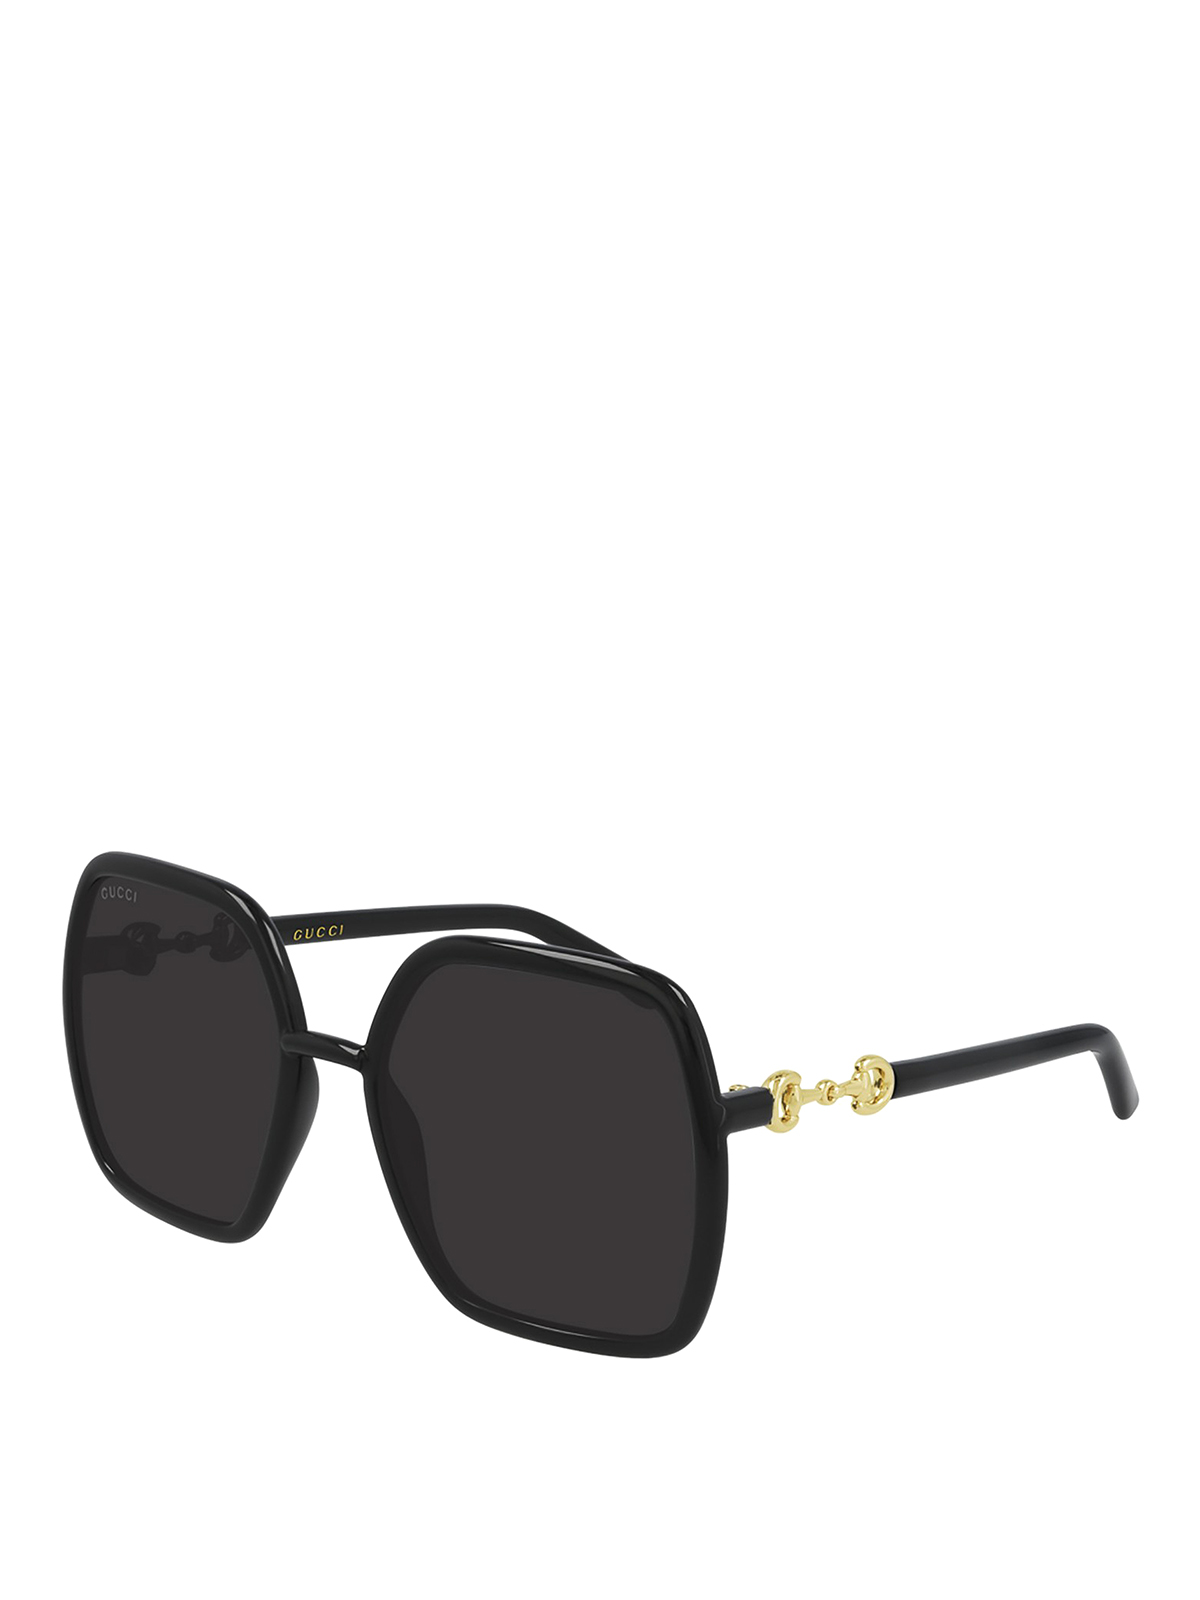 Gucci Horsebit Detail Squared Sunglasses In Black